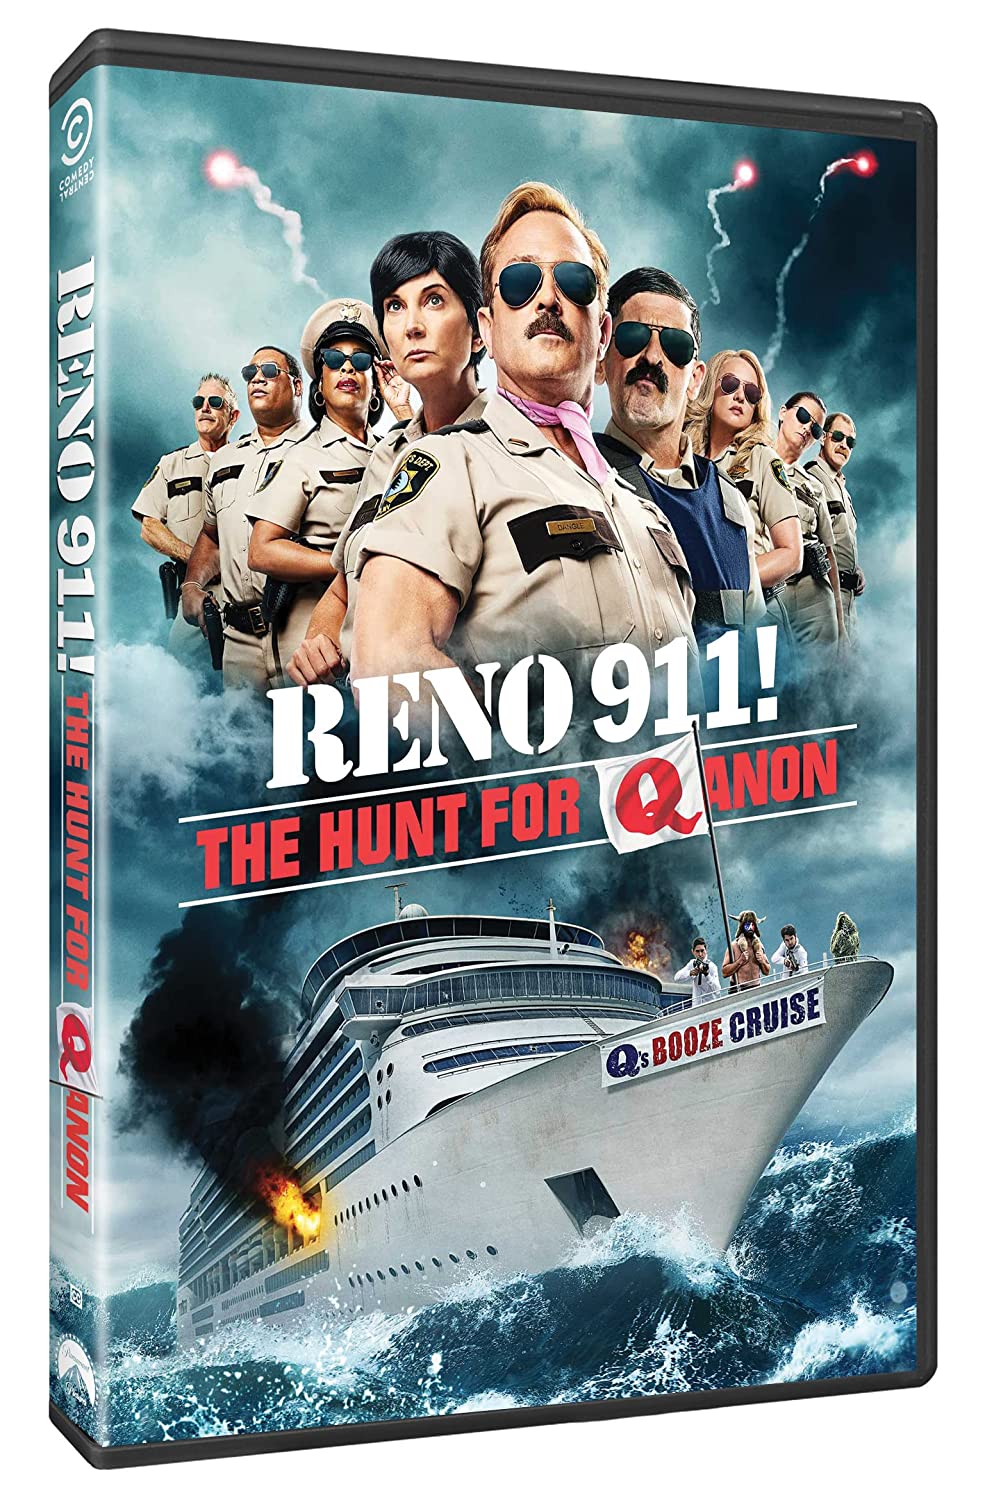 RENO 911! - Paramount+ Series - Where To Watch